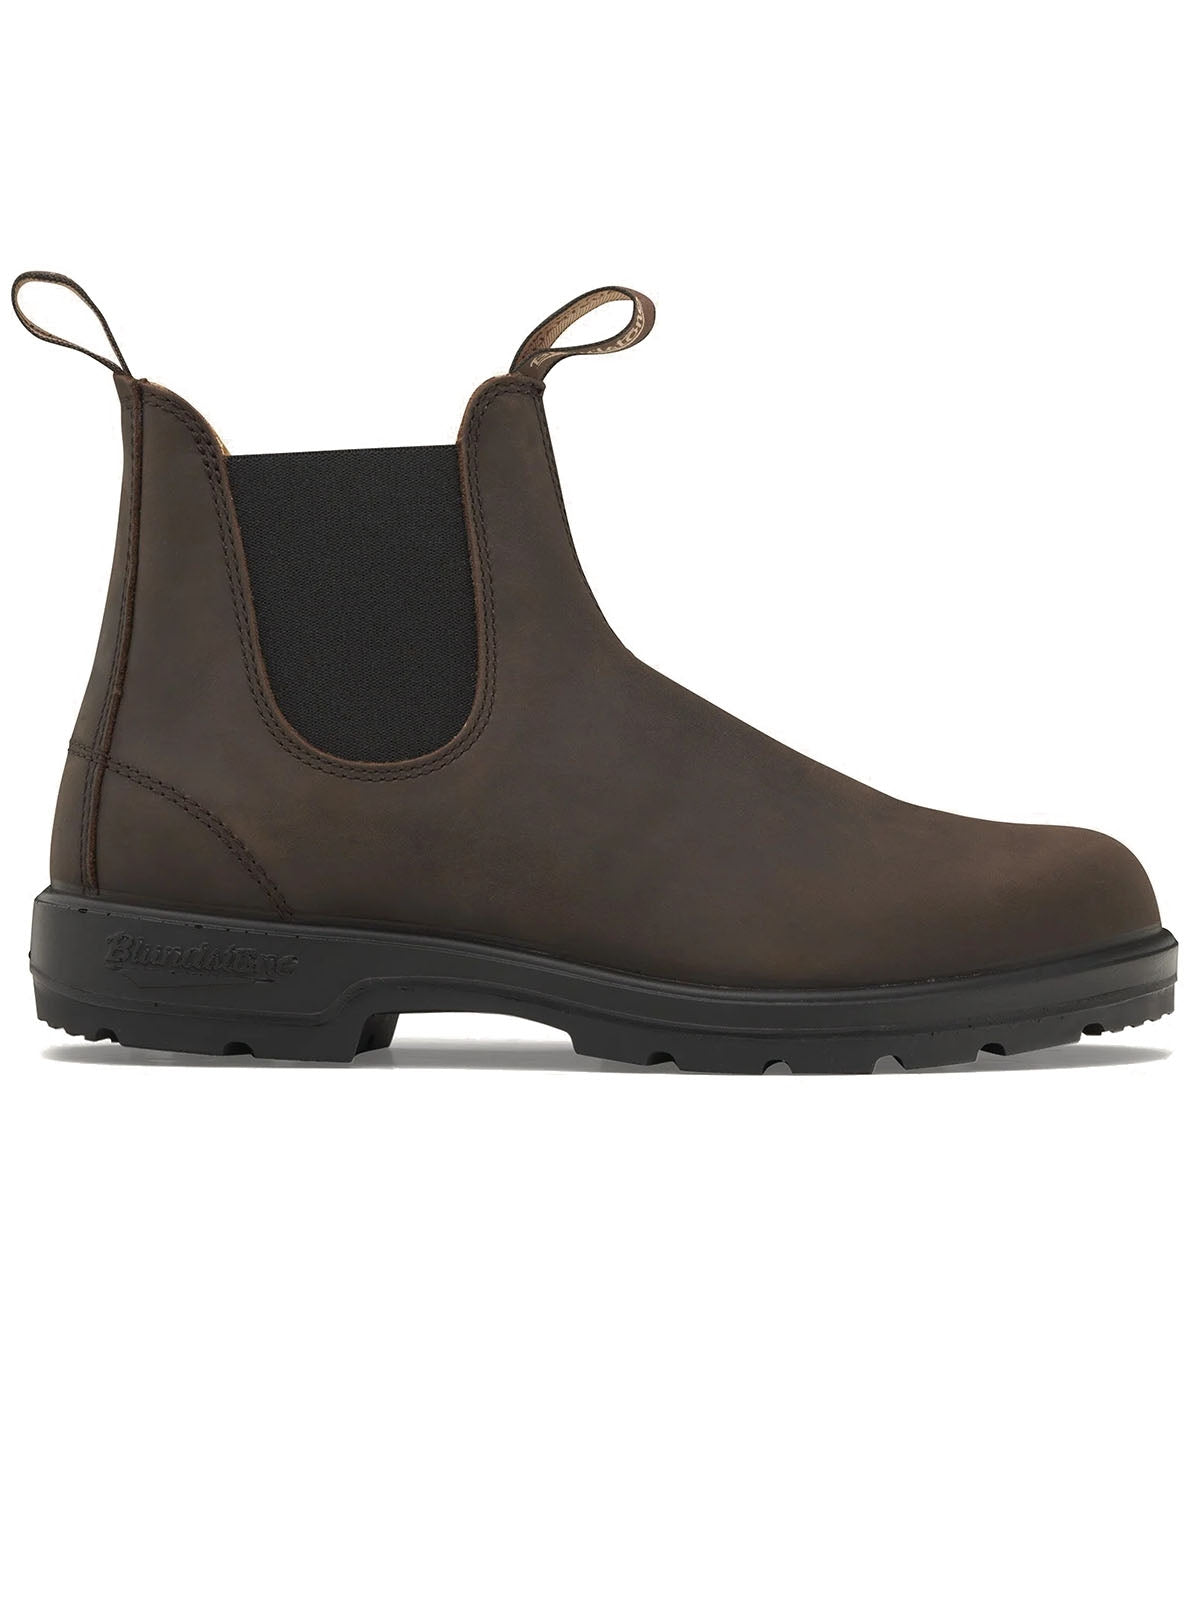 Stivali Uomo Blundstone - 2340 Premium Leather Lined Elastic Sided Boot - Marrone